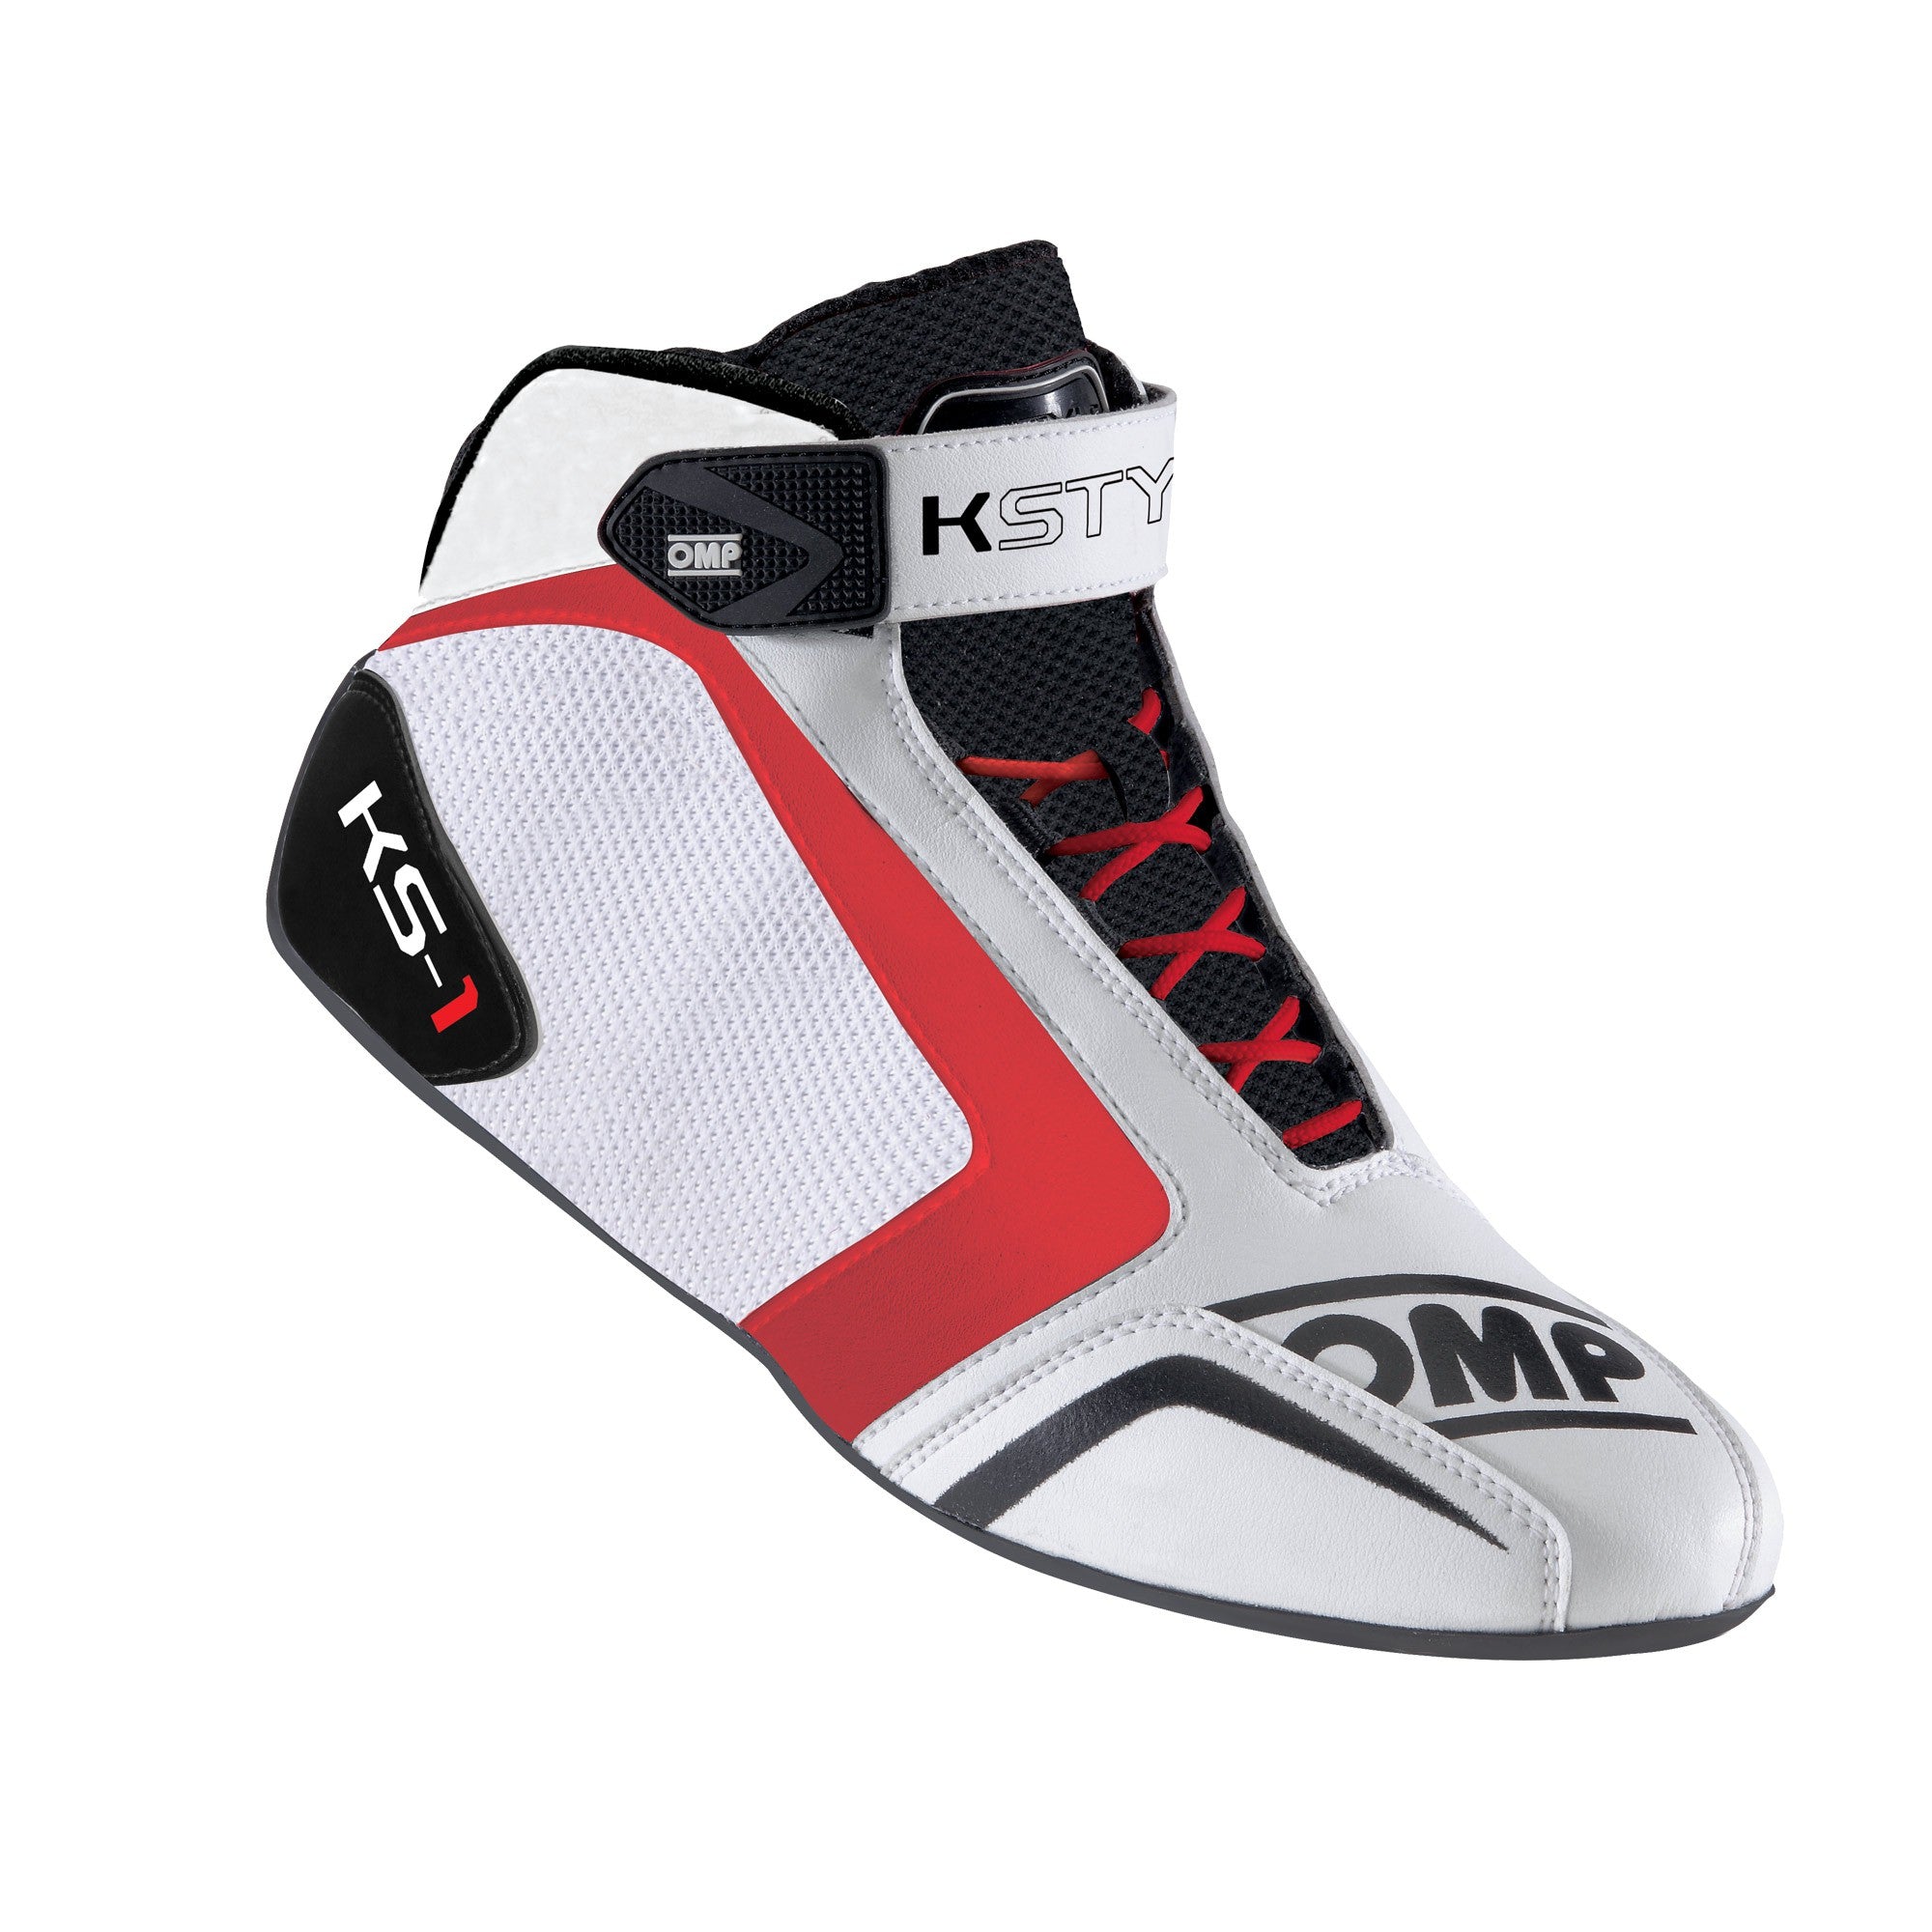 OMP KC0-0815-A01-120-40 (IC/81512040) Kart shoes KS-1, white/black/red, size 40 Photo-0 